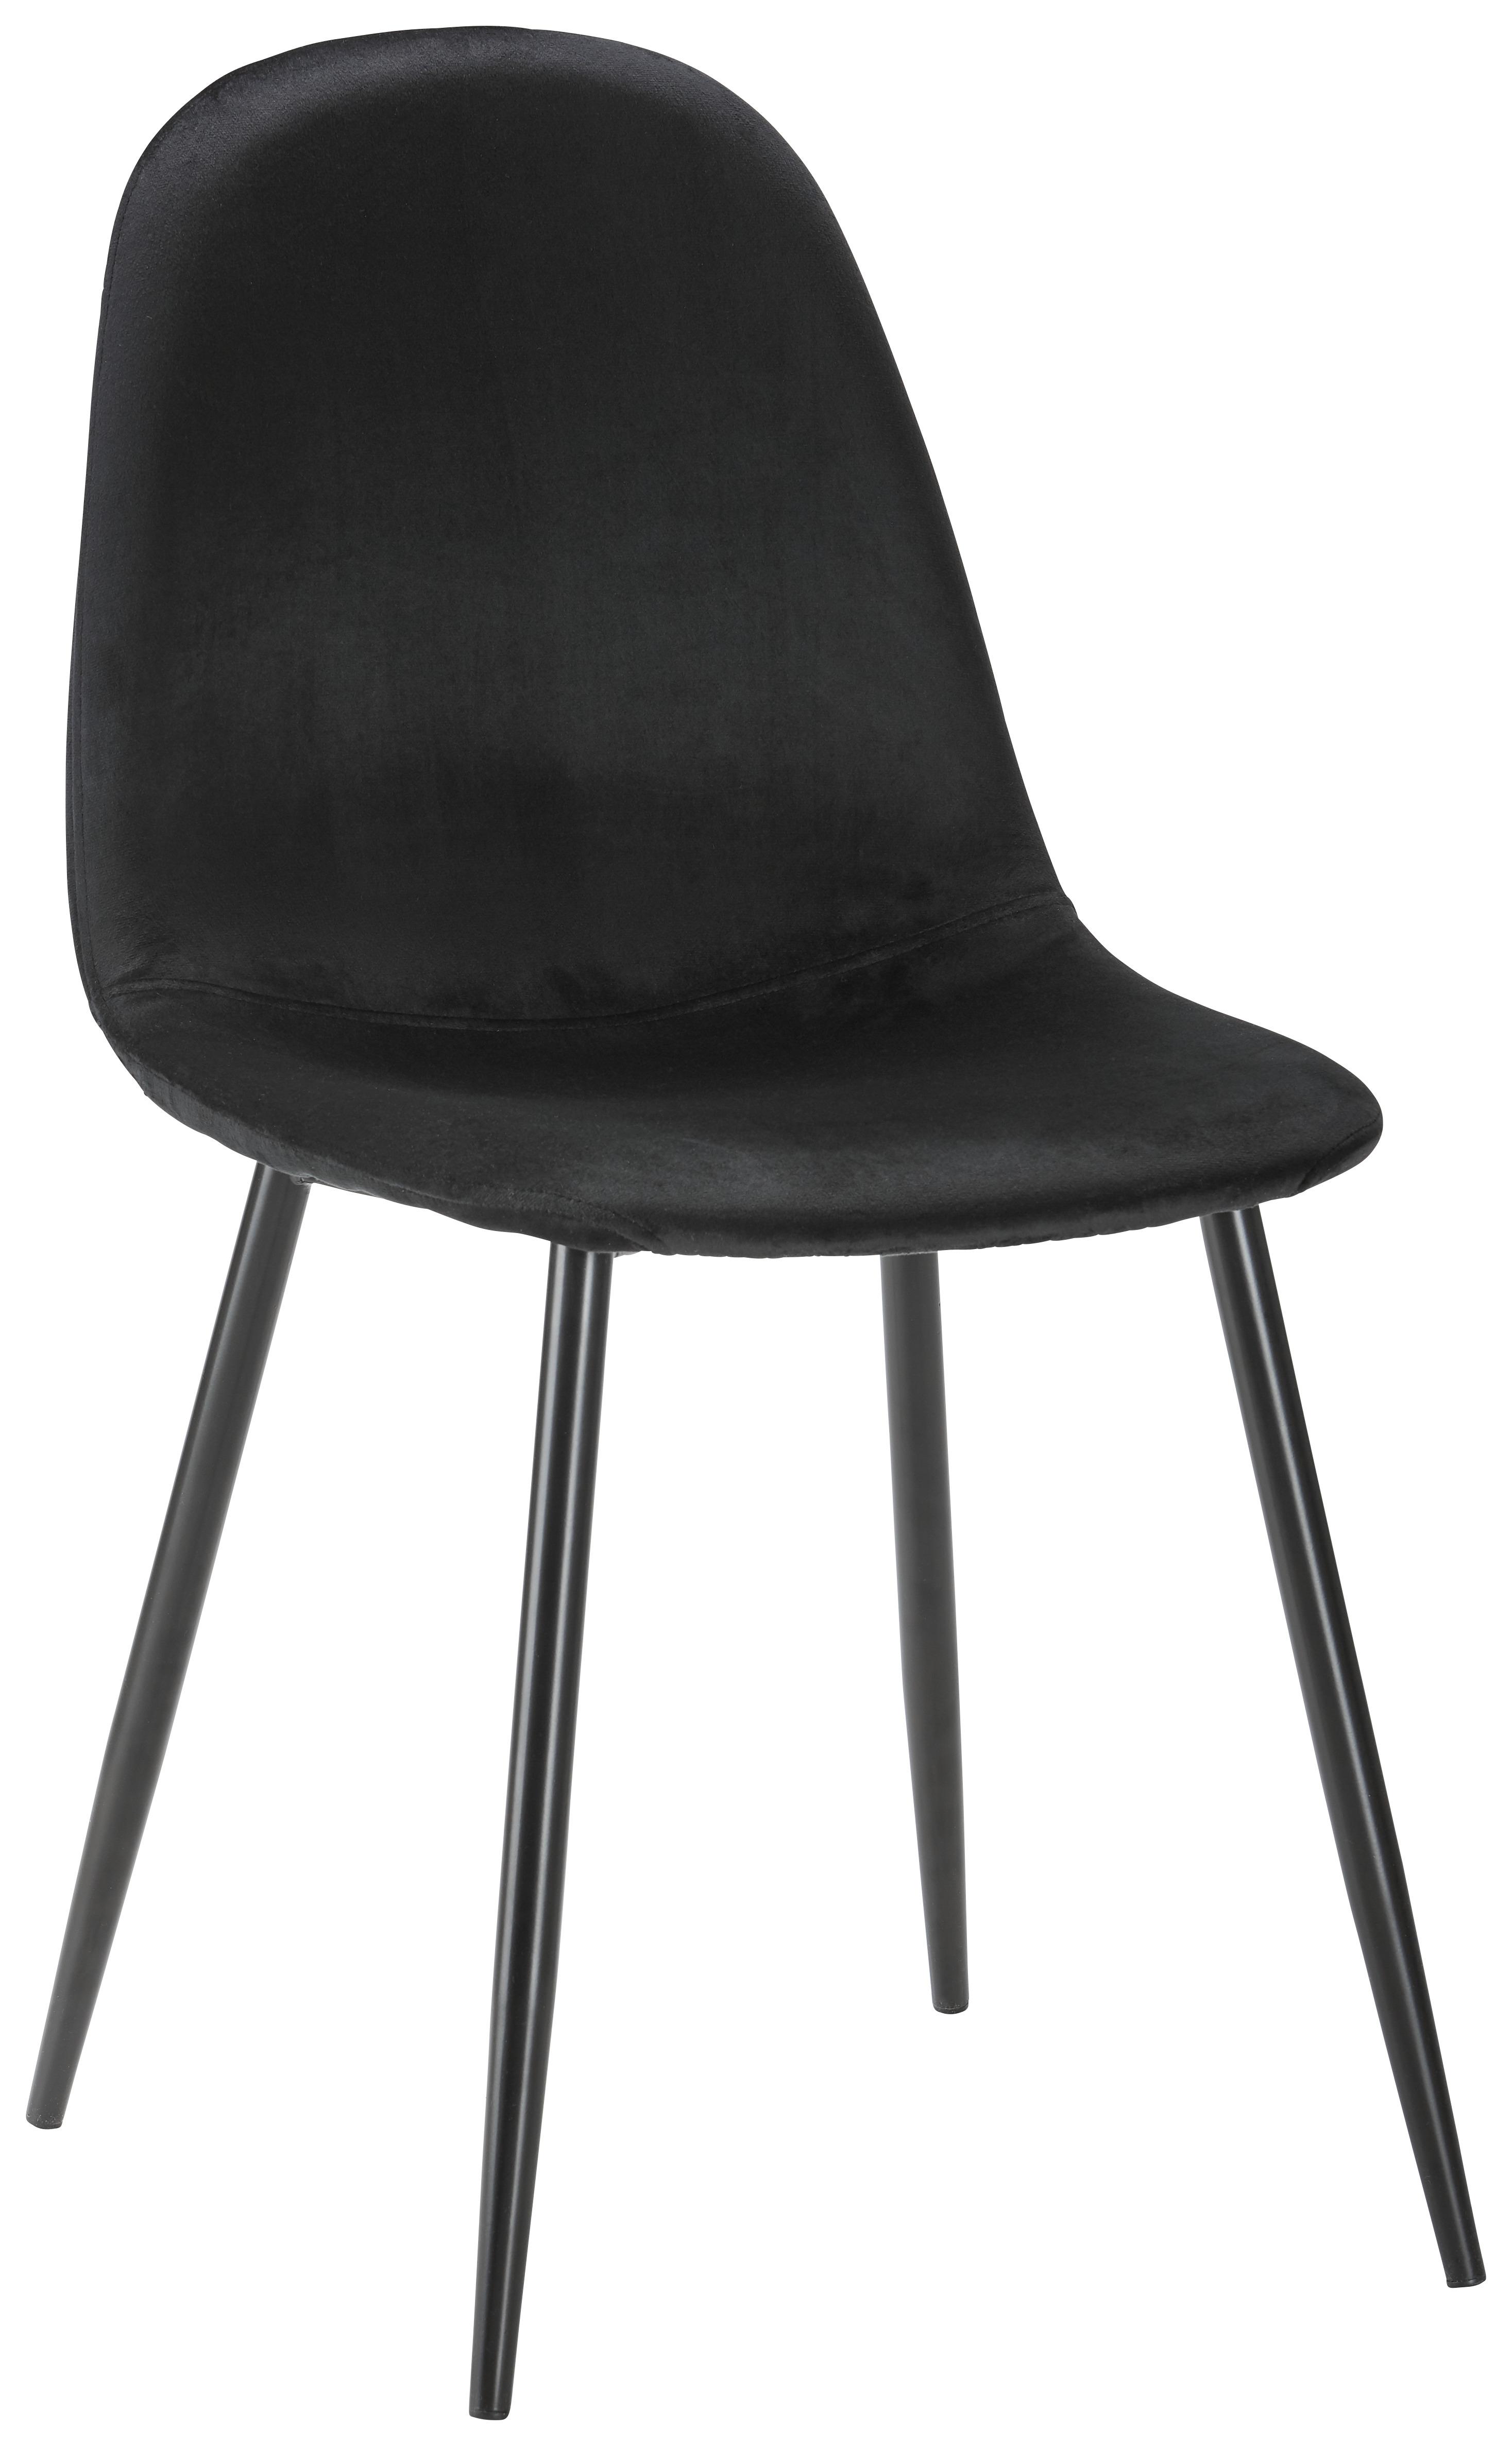 Stuhl "Lio", Samtbezug, schwarz, Gepolstert - Schwarz, MODERN, Holz/Textil (43/86/55cm) - Bessagi Home